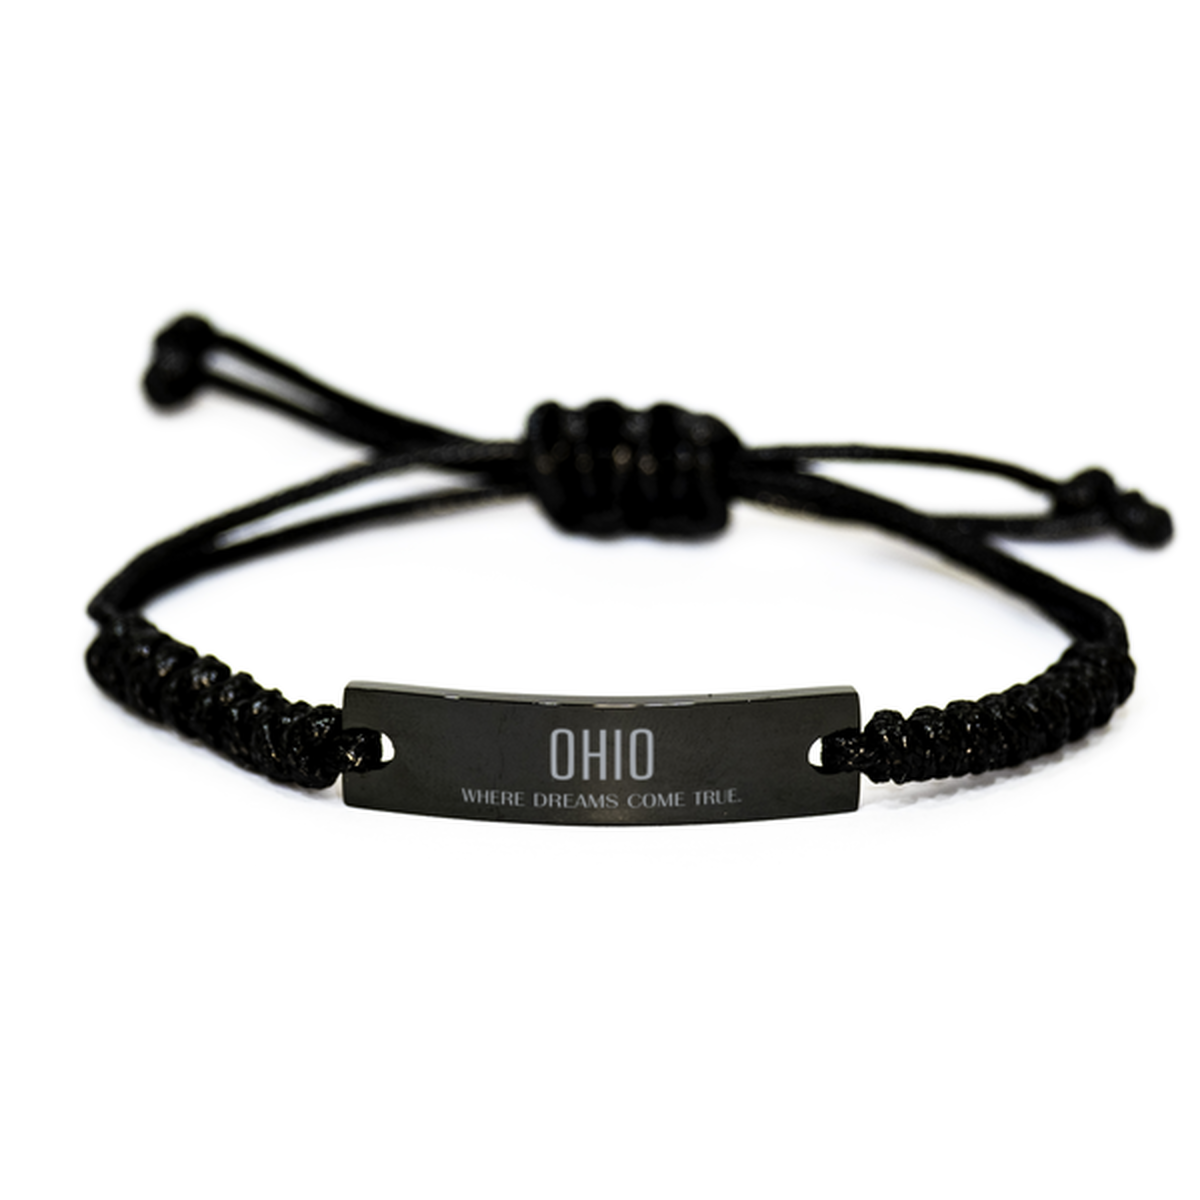 Love Ohio State Black Rope Bracelet, Ohio Where dreams come true, Birthday Inspirational Gifts For Ohio Men, Women, Friends